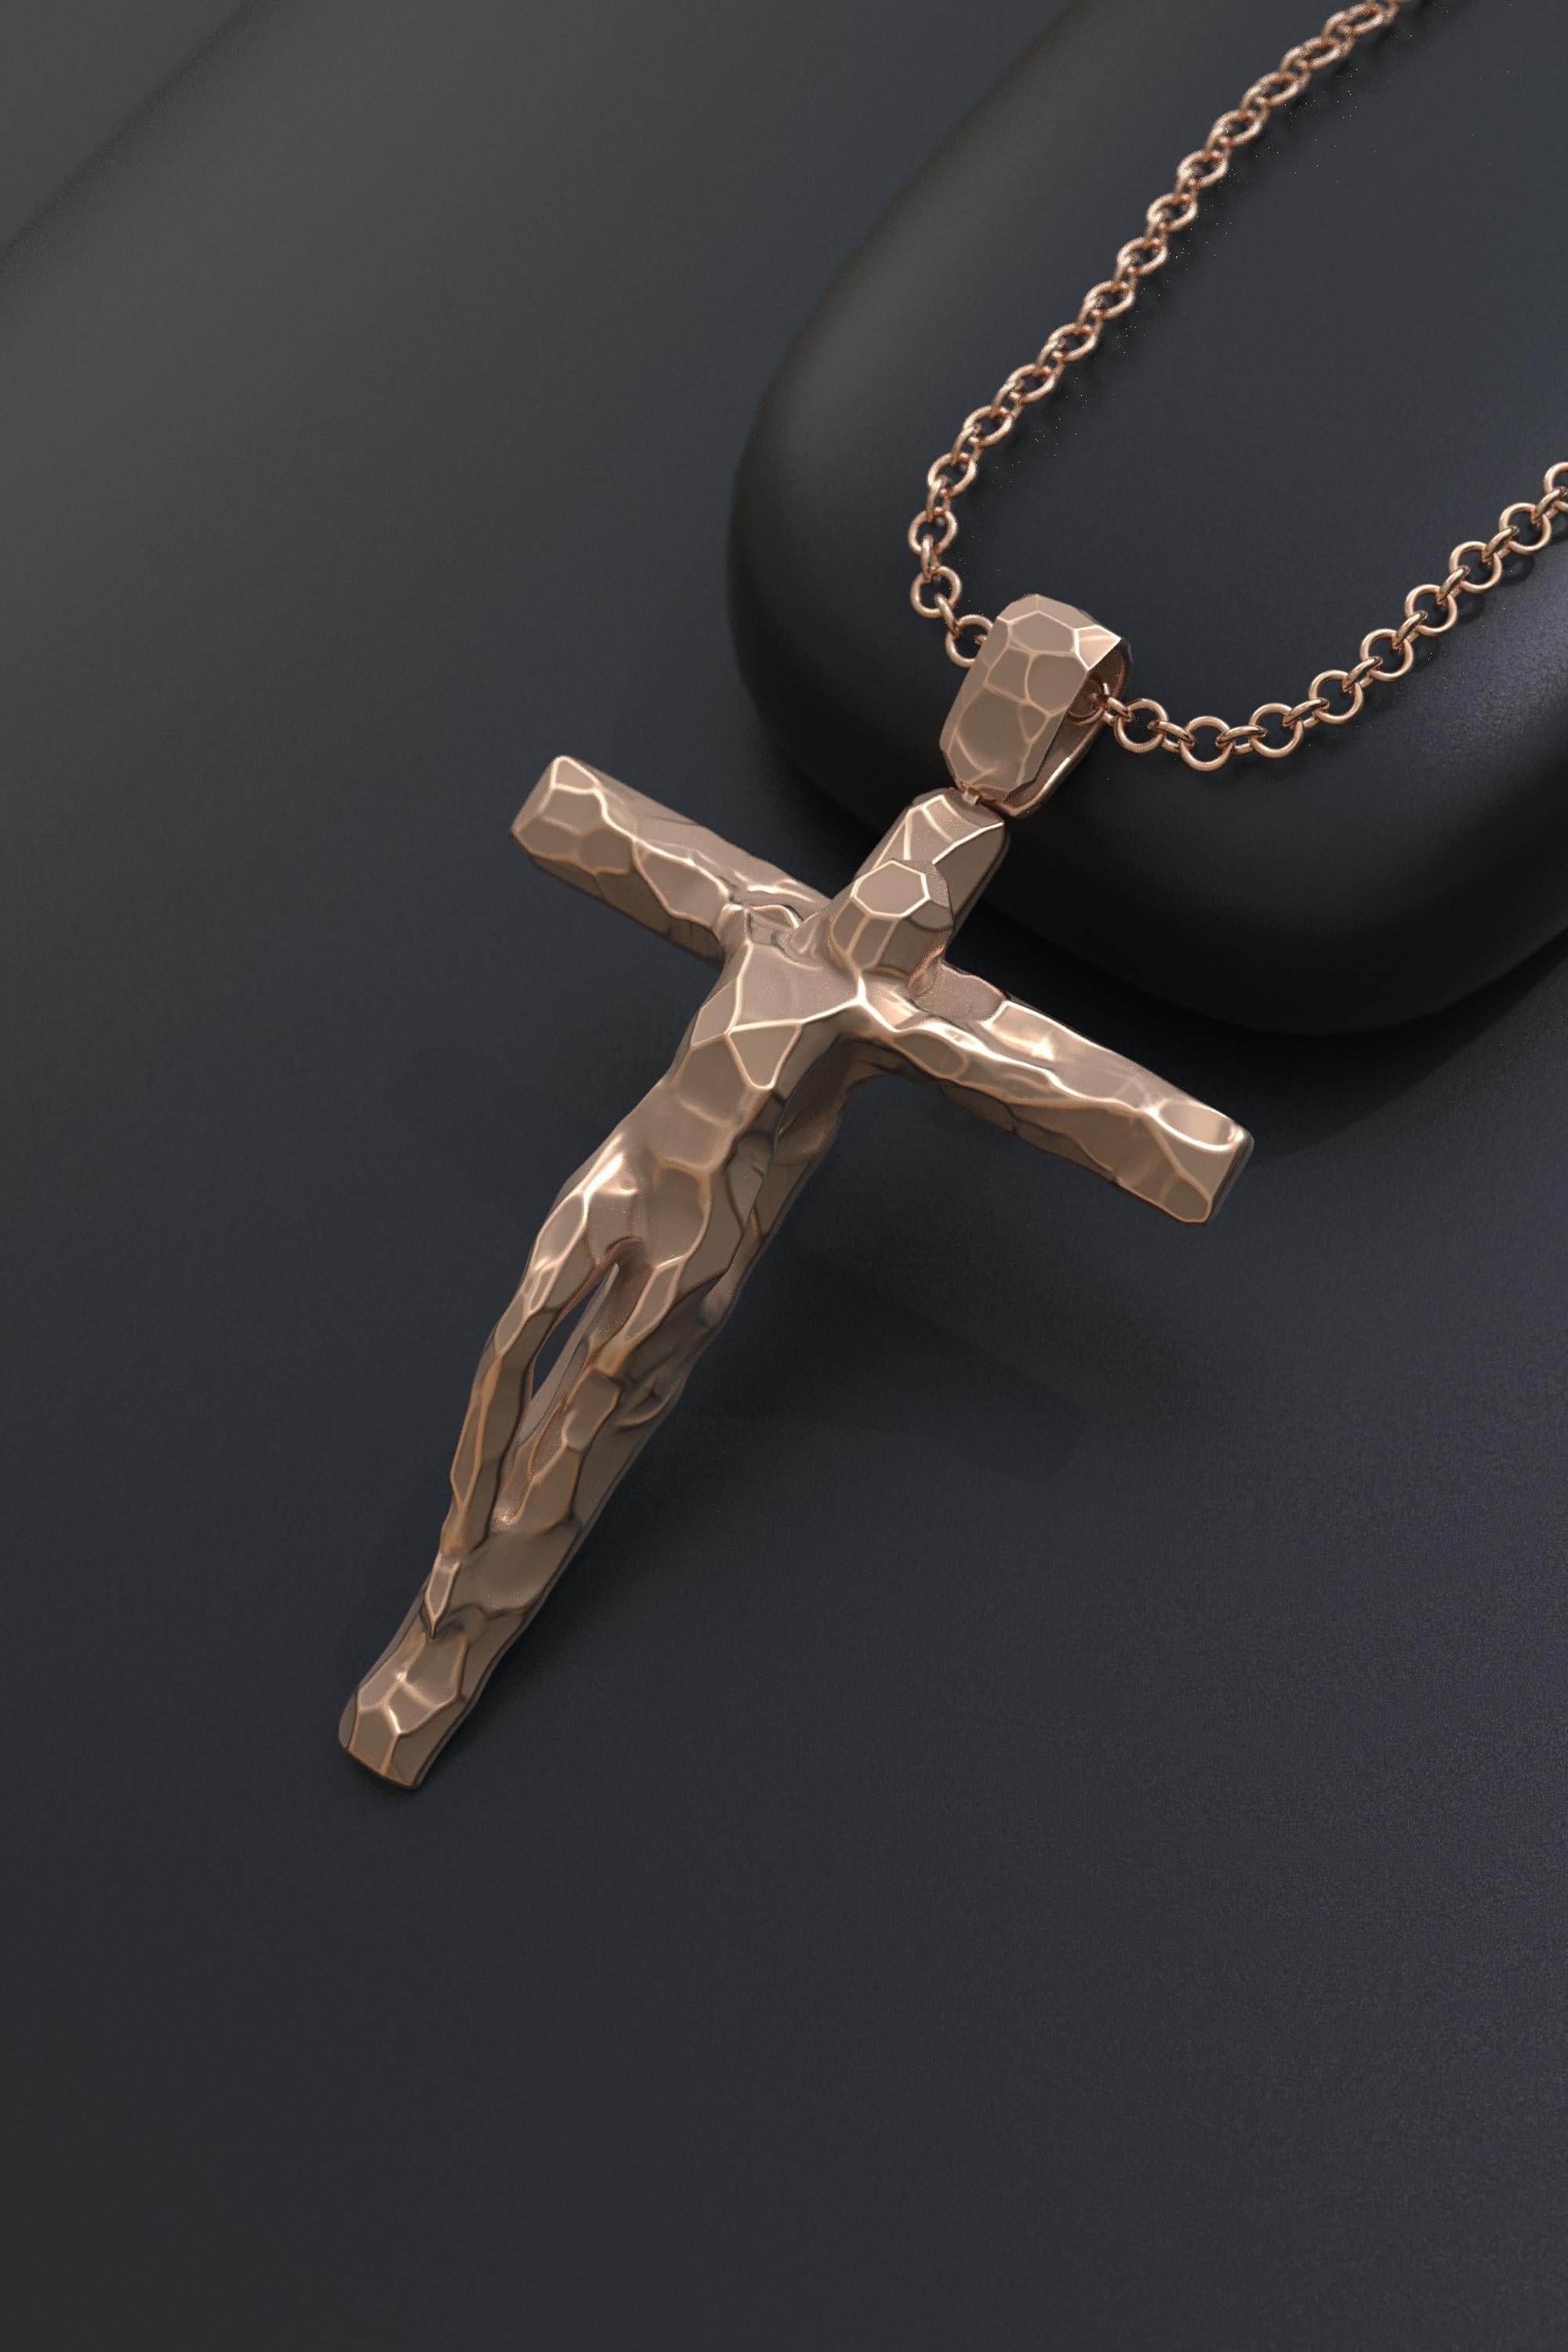 14K Solid Gold Italian Cross Pendant with Italian Gucci necklace | eBay